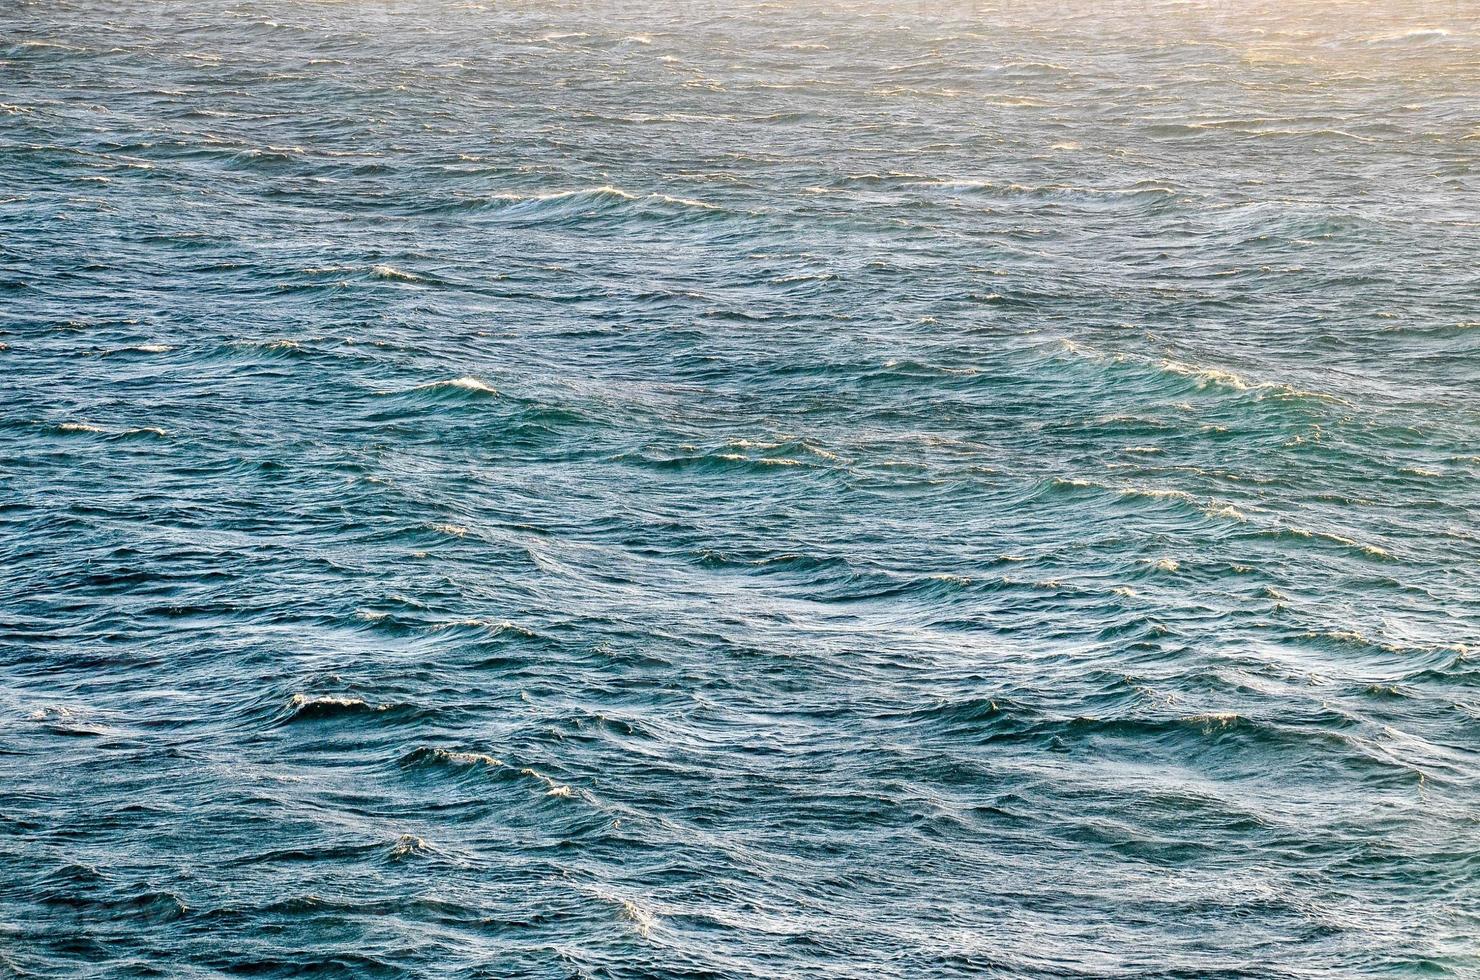 Water texture background photo